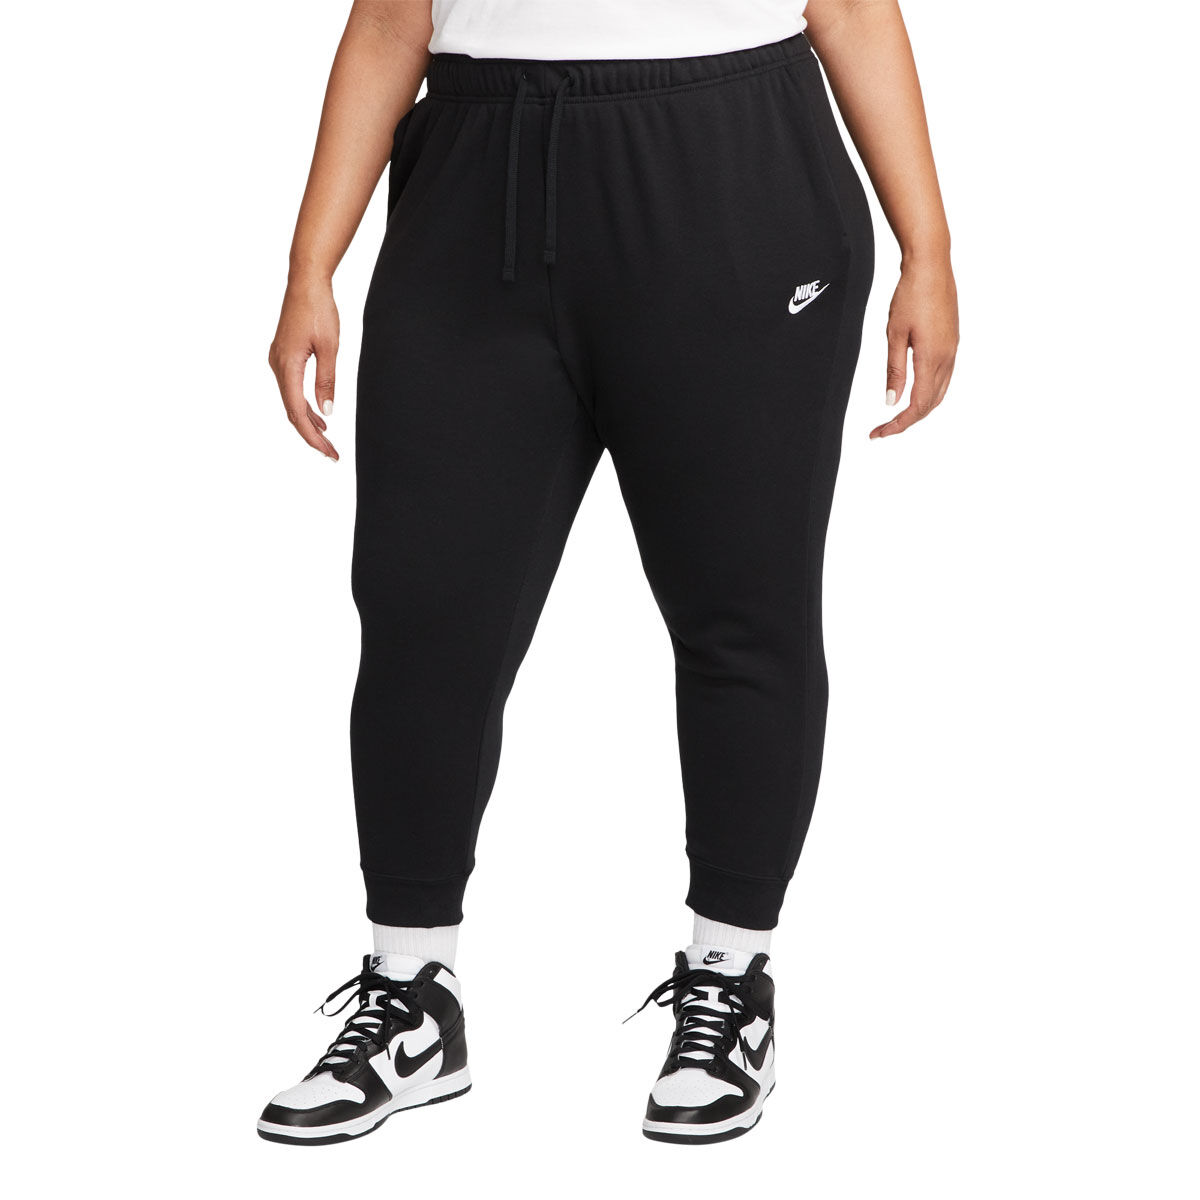 Nike* Gray Print Size Large Ladies Exercise Capris